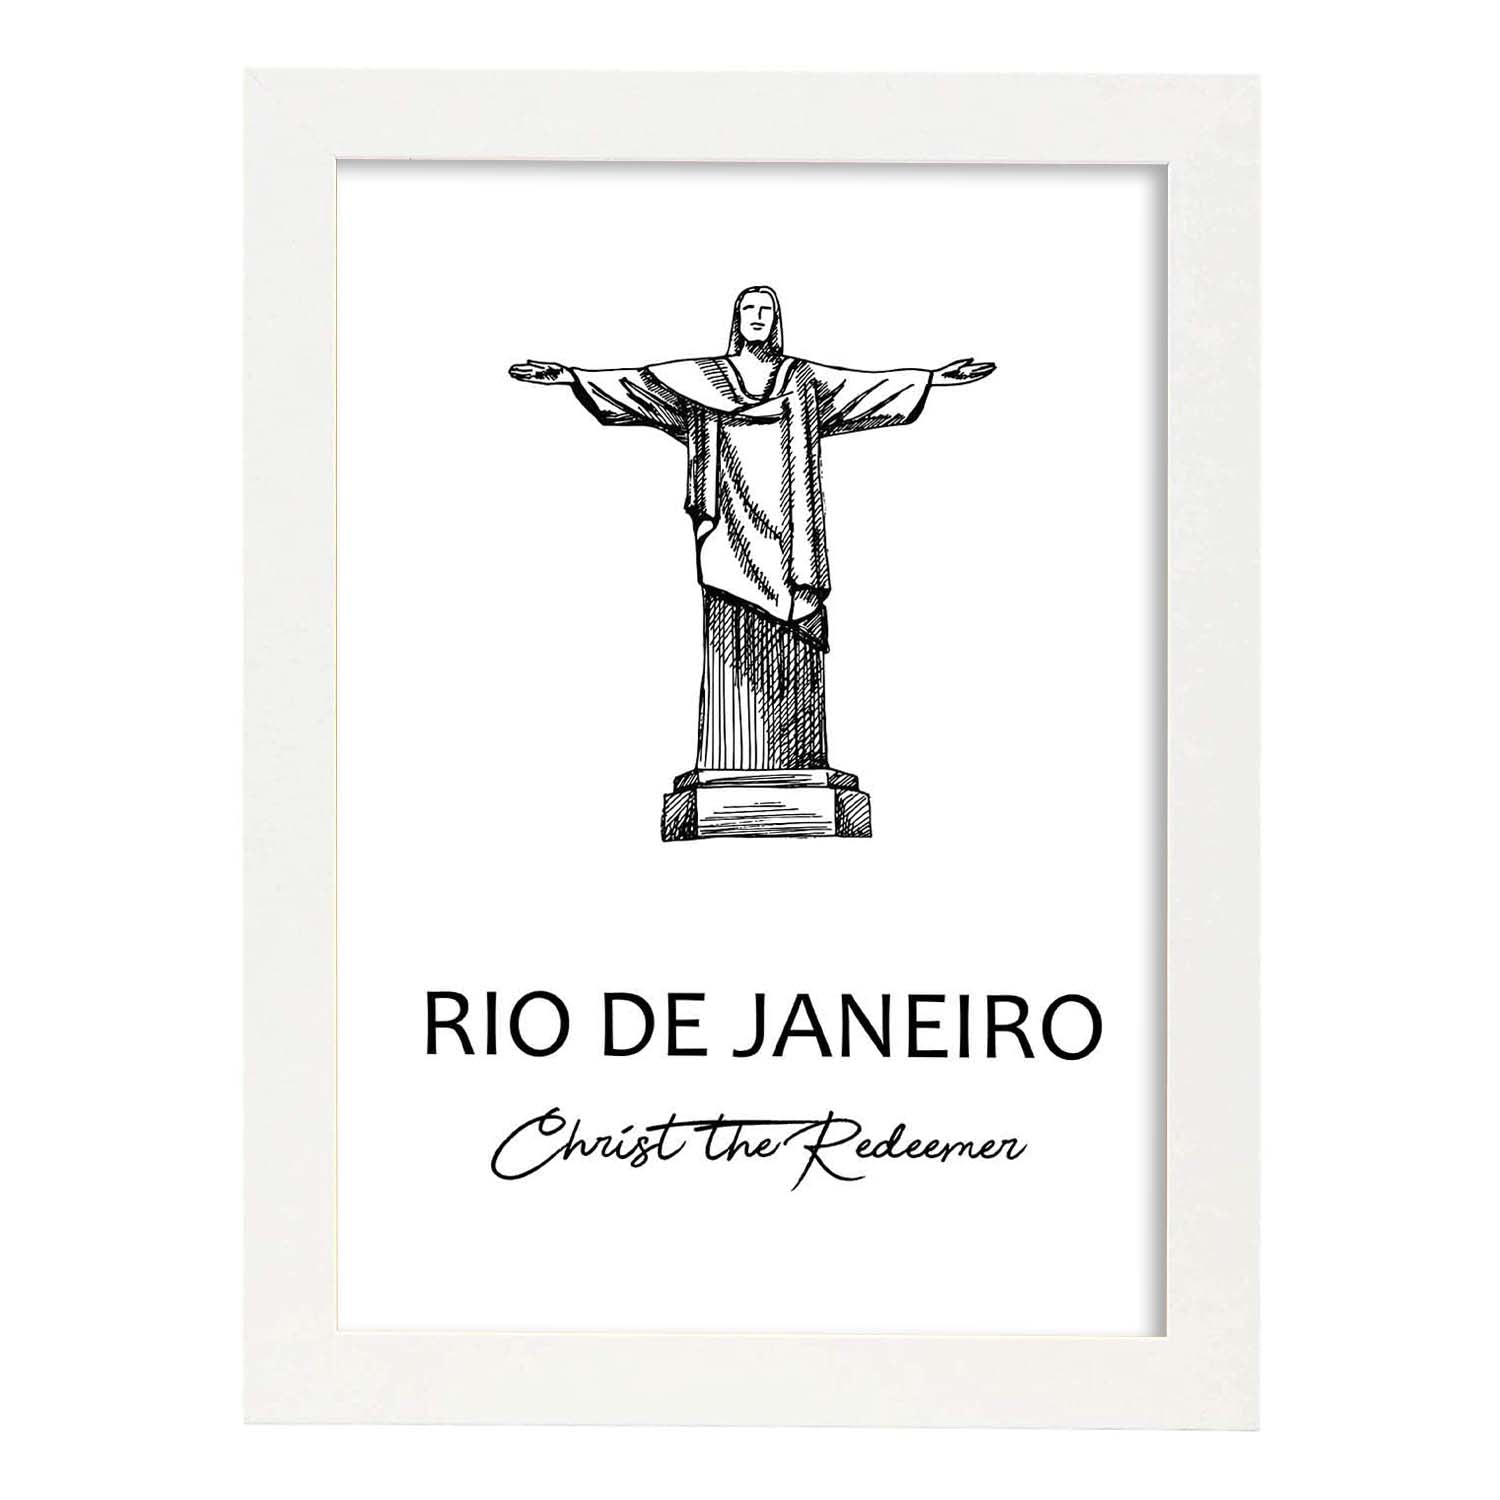 Poster de Rio de Janeiro - Cristo redentor. Láminas con monumentos de ciudades.-Artwork-Nacnic-A4-Marco Blanco-Nacnic Estudio SL